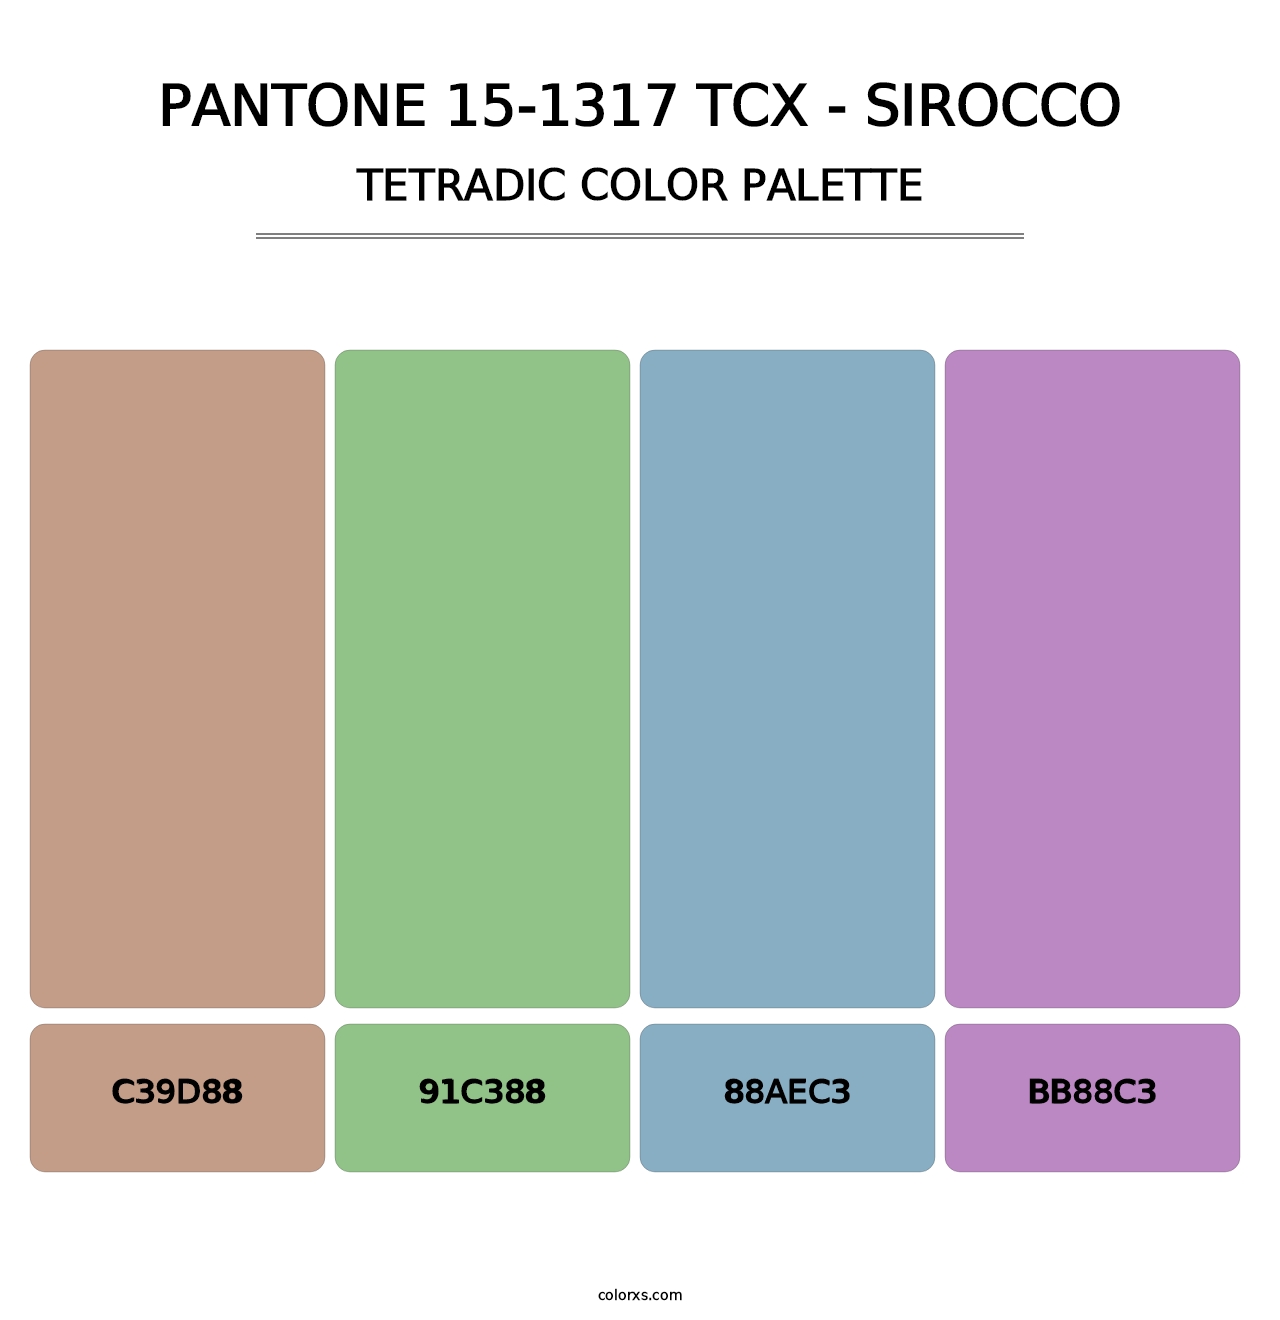 PANTONE 15-1317 TCX - Sirocco - Tetradic Color Palette